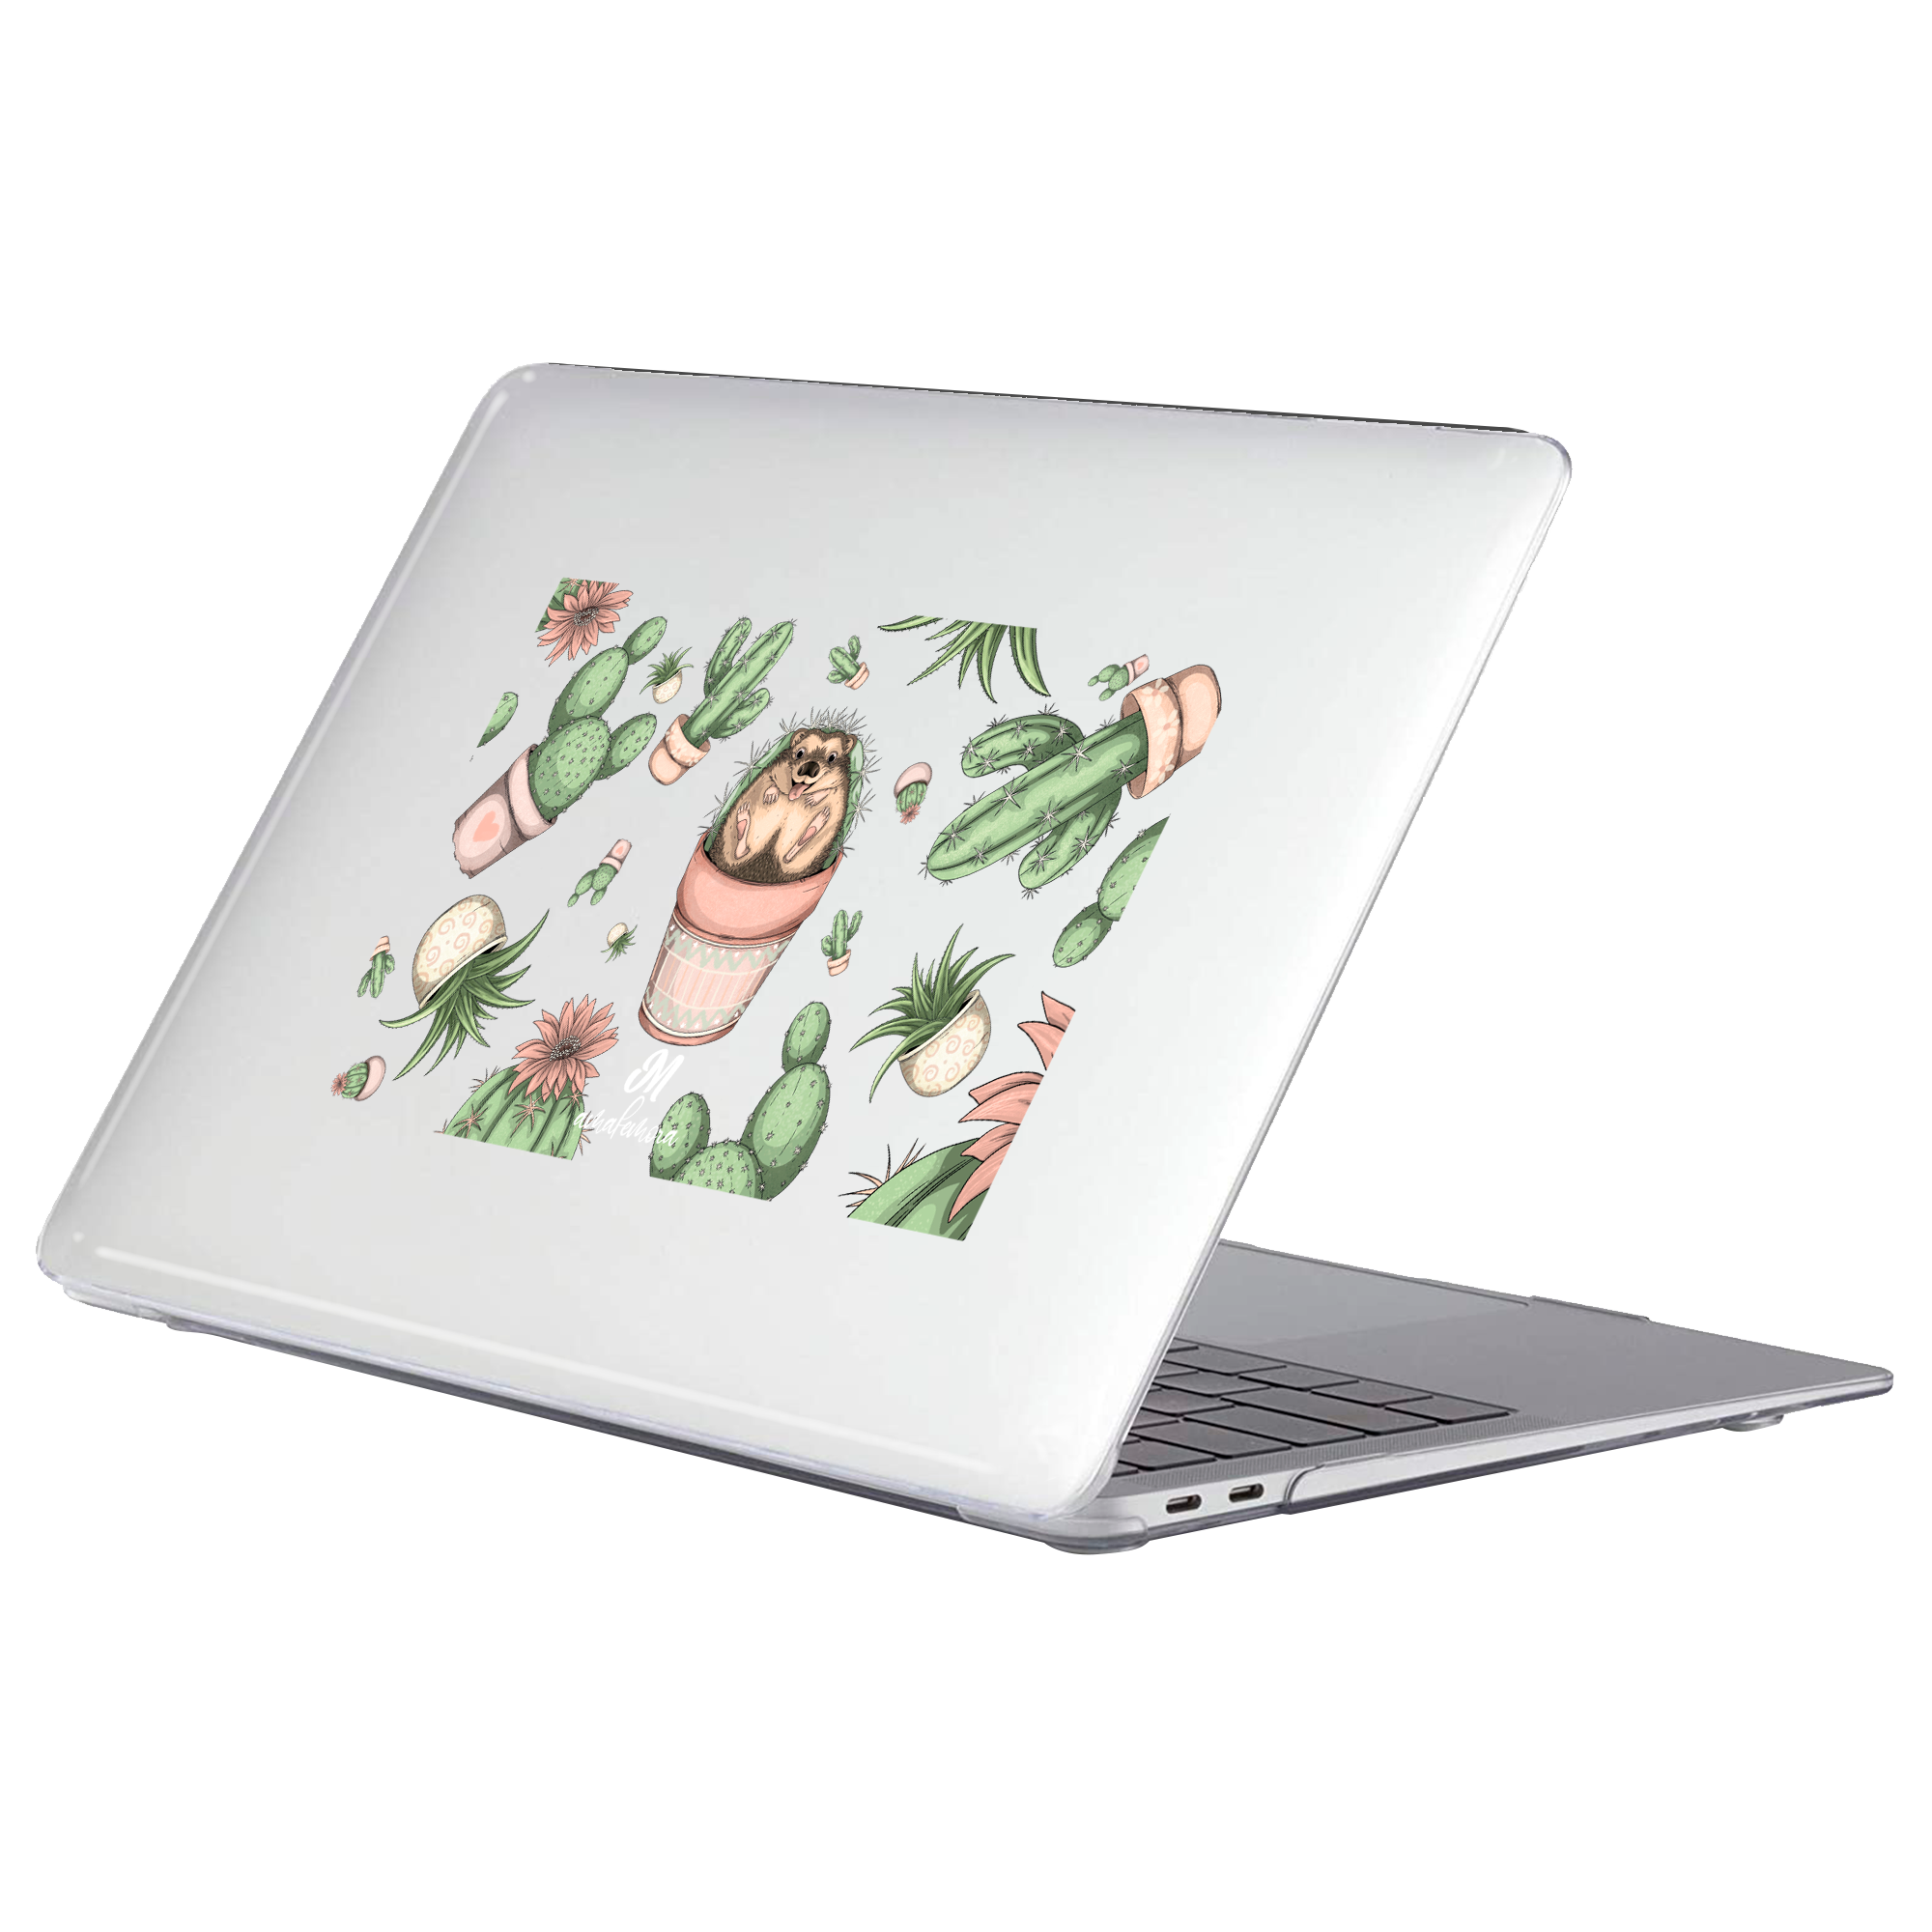 Spike MacBook Case - Mandala Cases